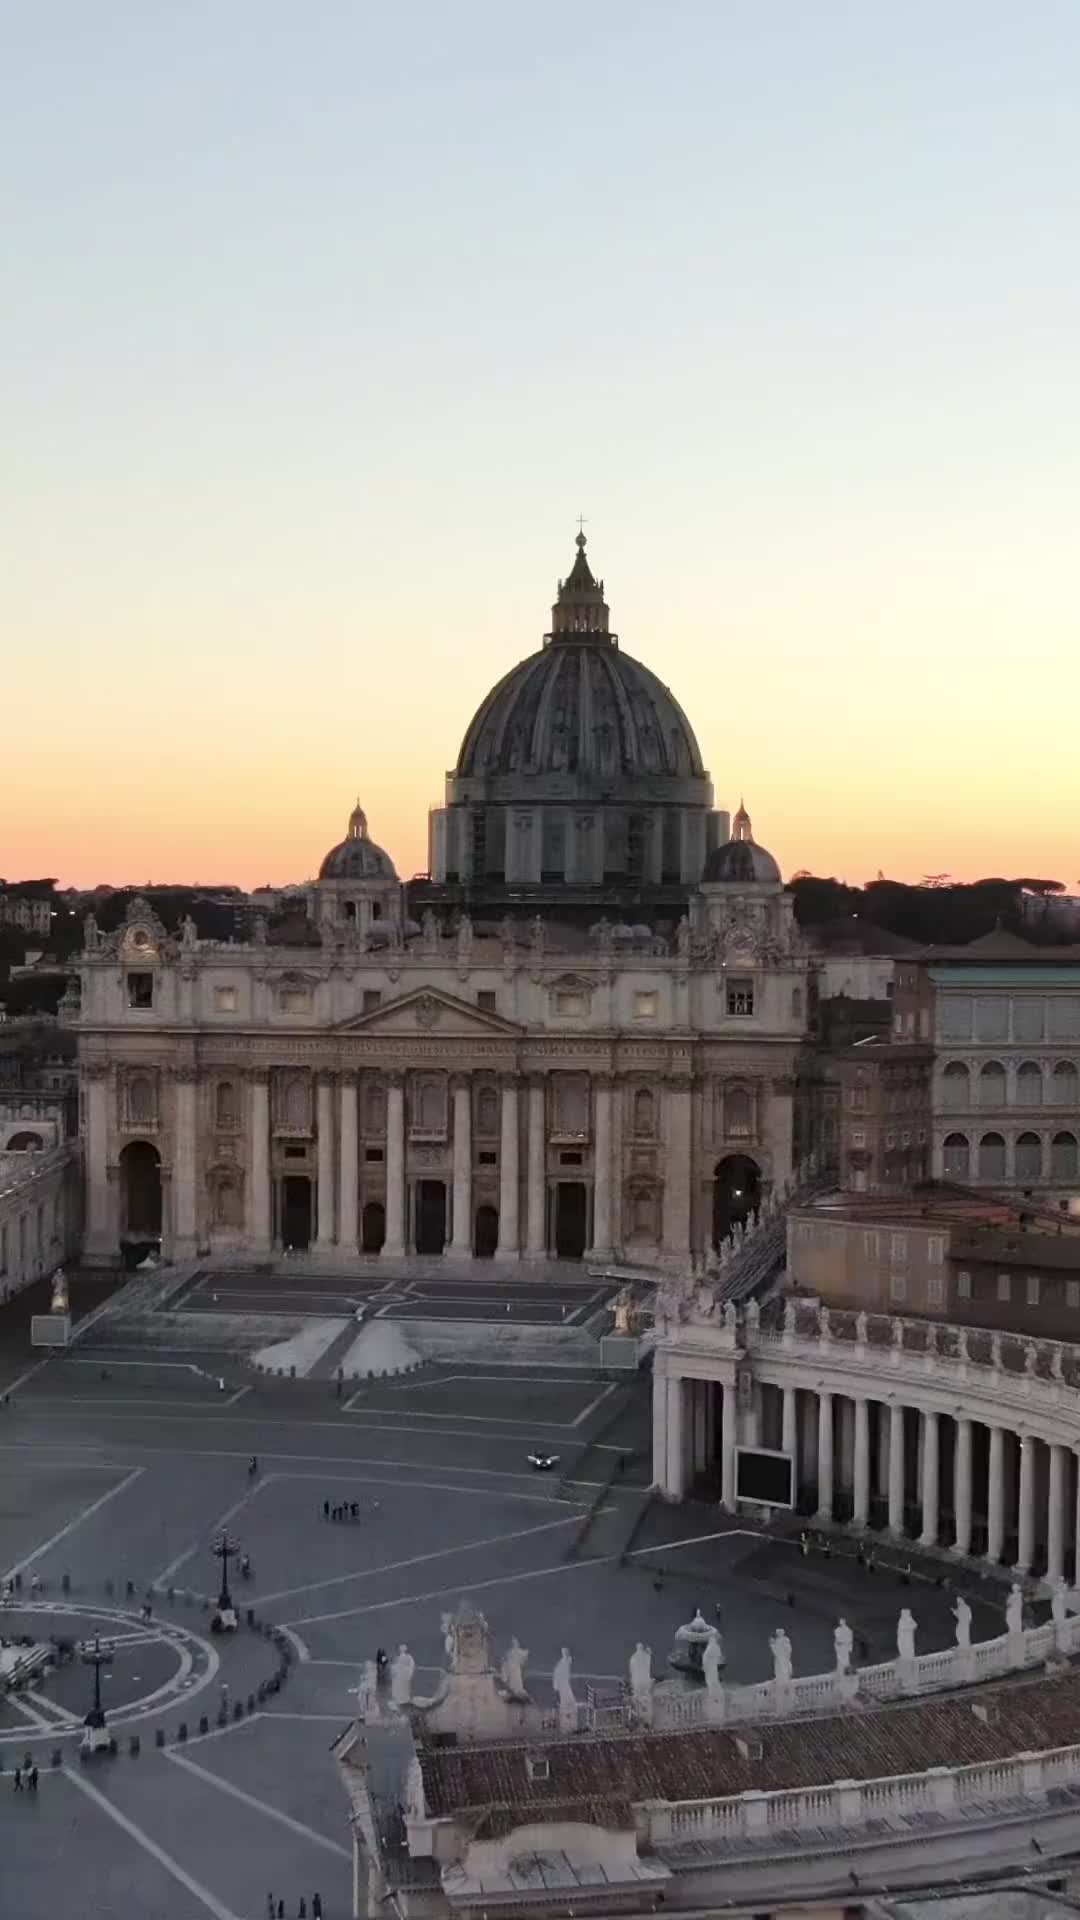 Explore St. Peter's Basilica in Vatican City